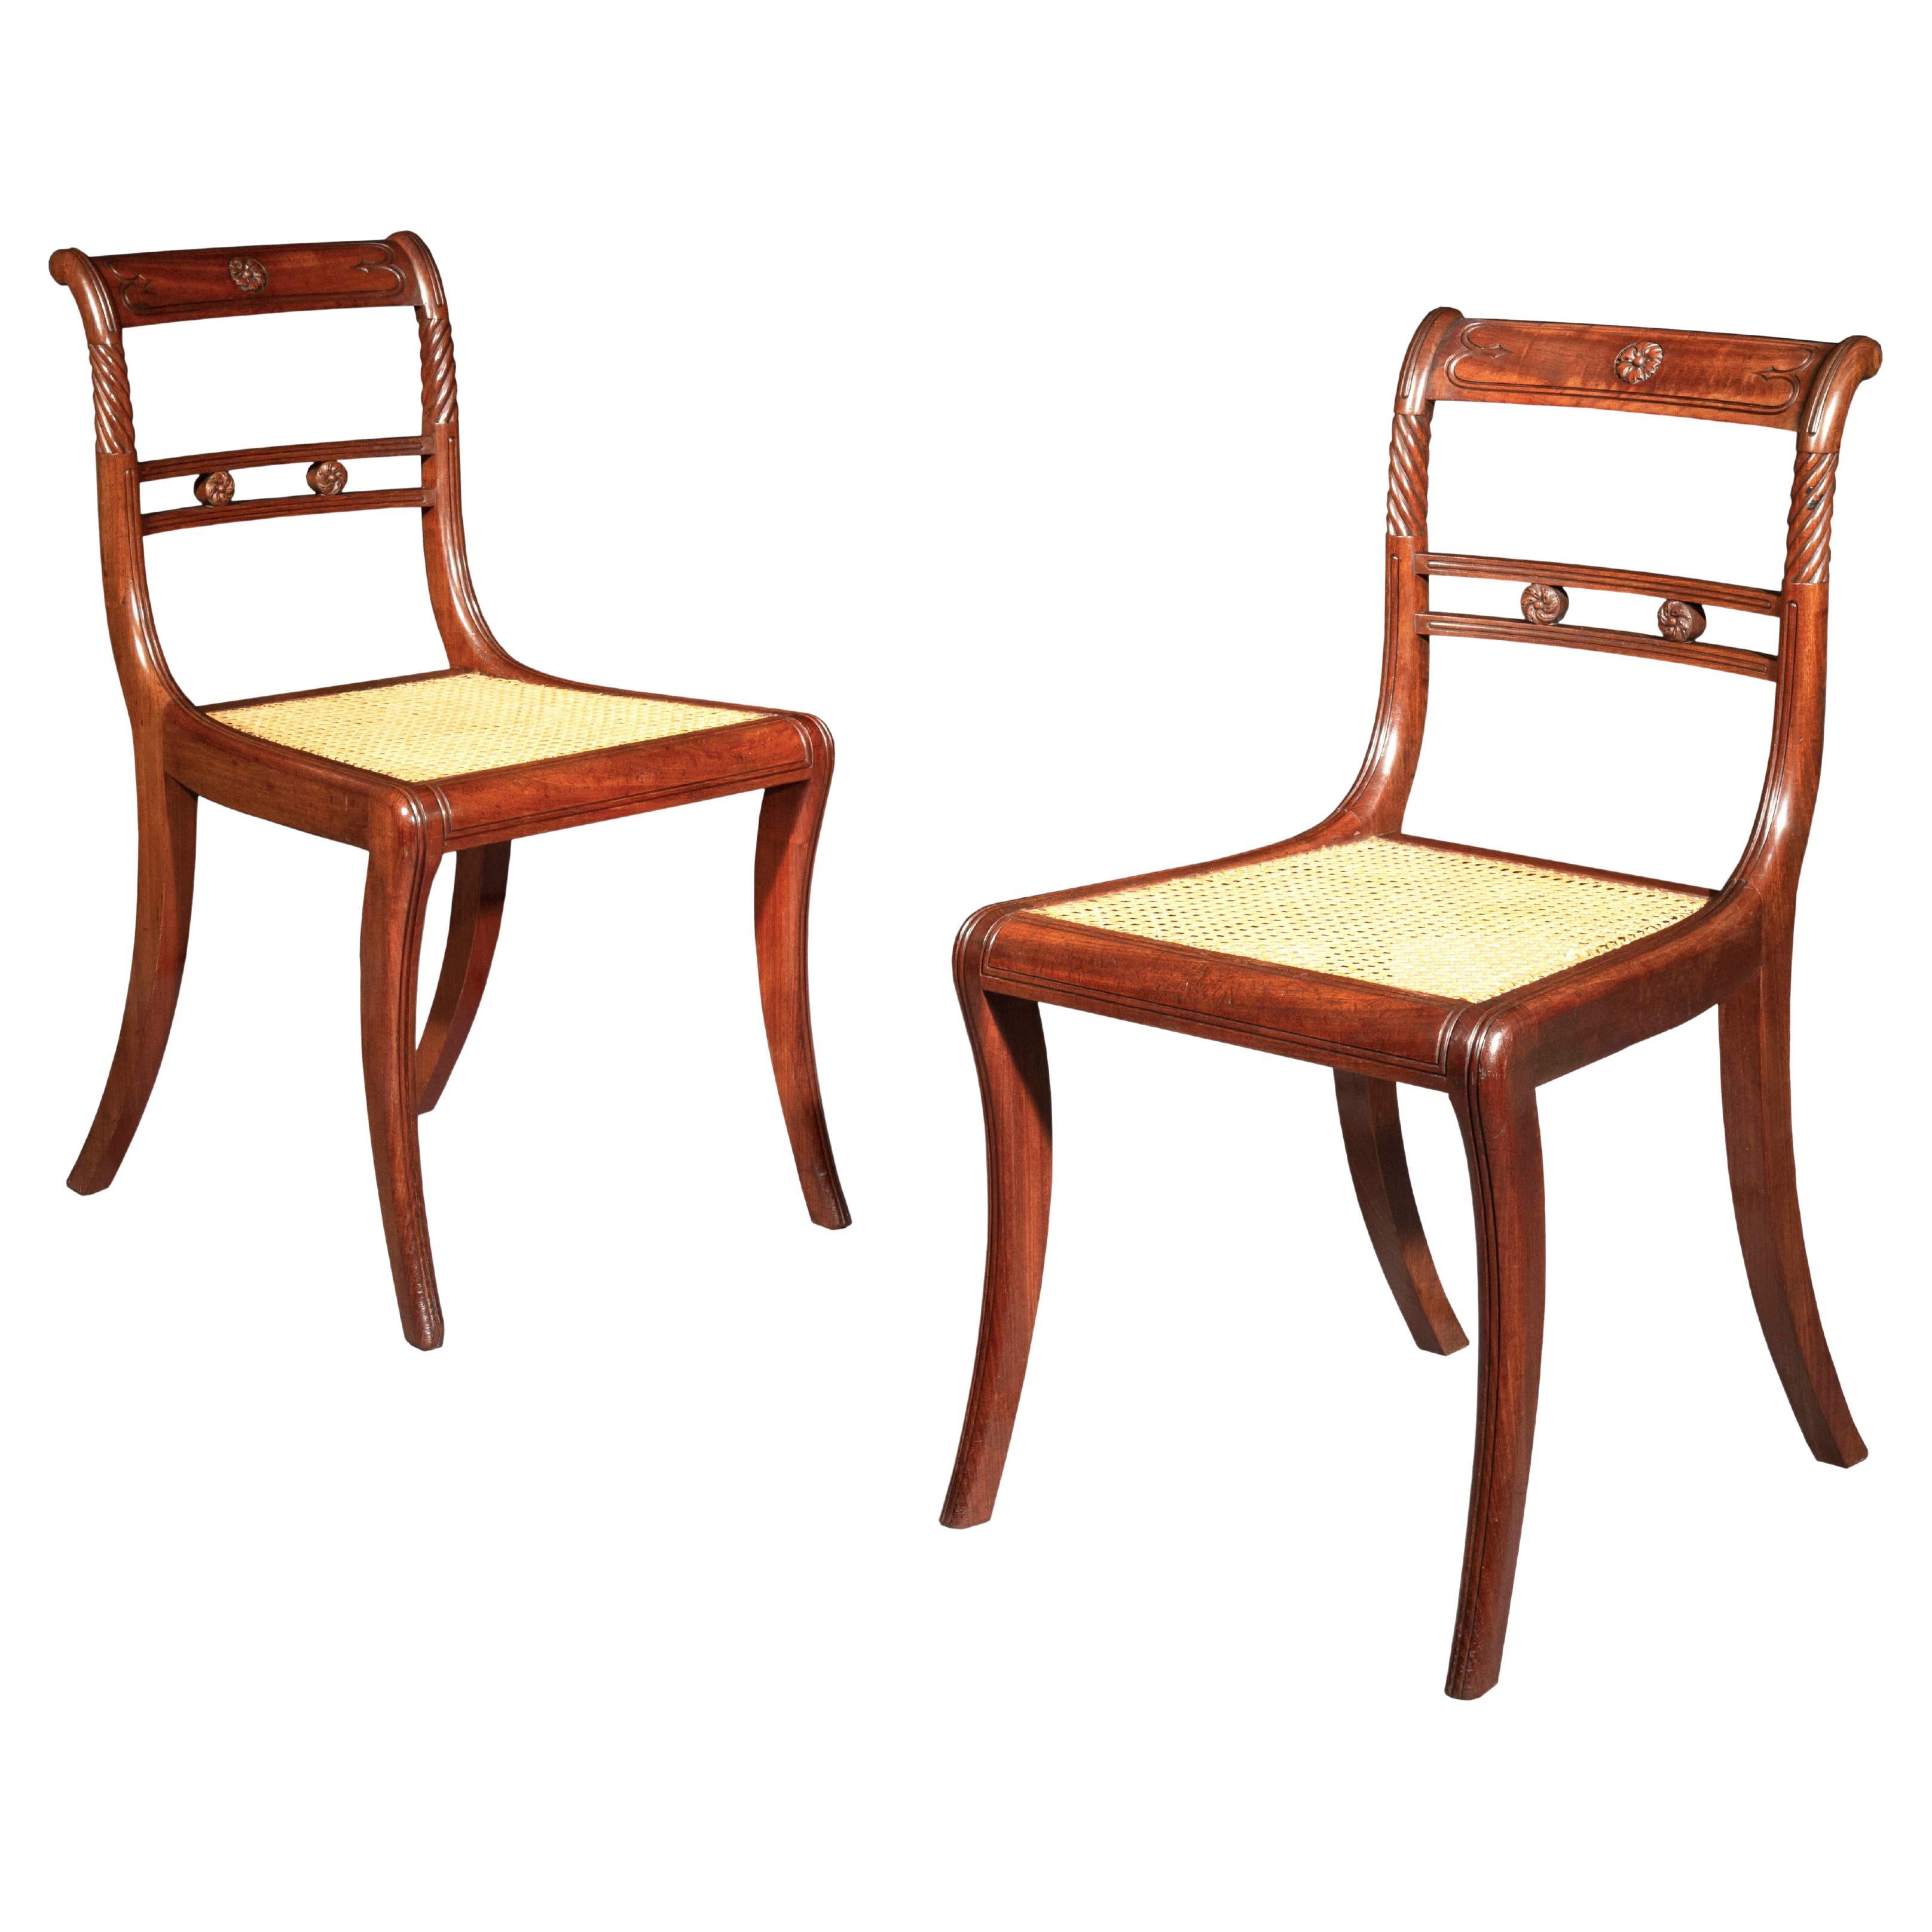 Set of Twelve Regency Klismos Chairs, Attributed to Gillows